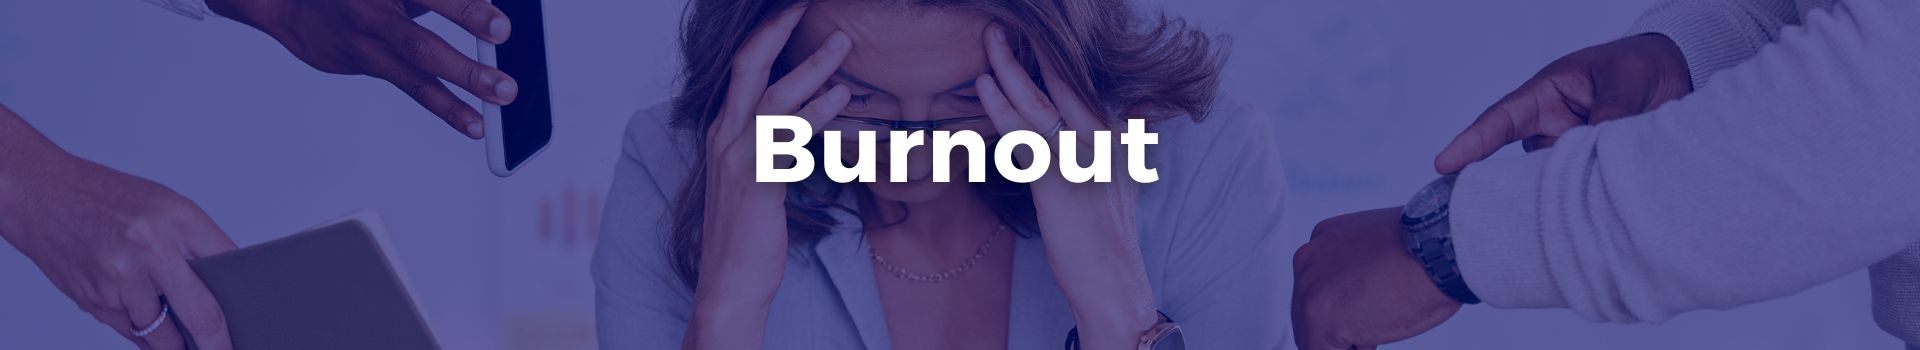 burnout-umar-hassan-two-banner